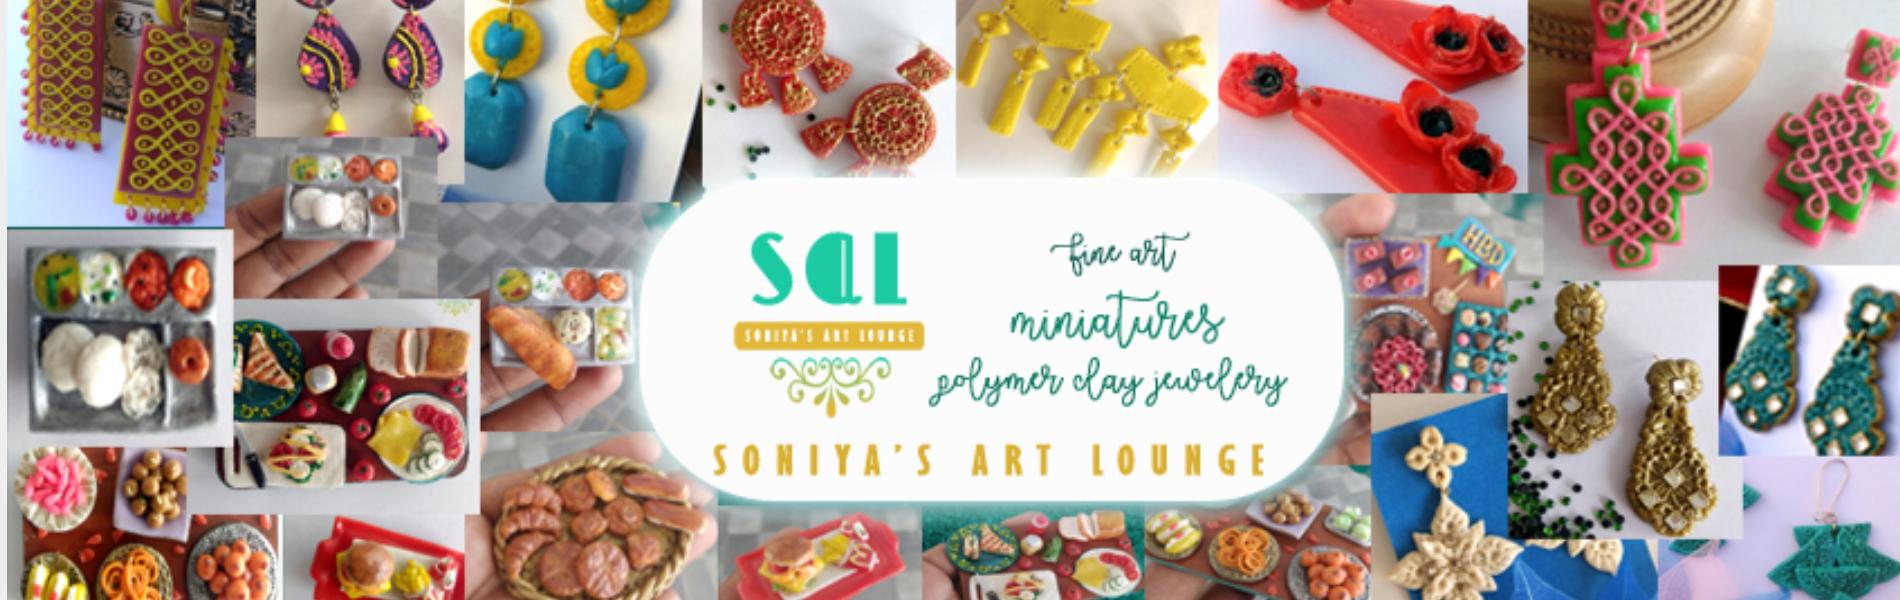 Soniya's Art Lounge